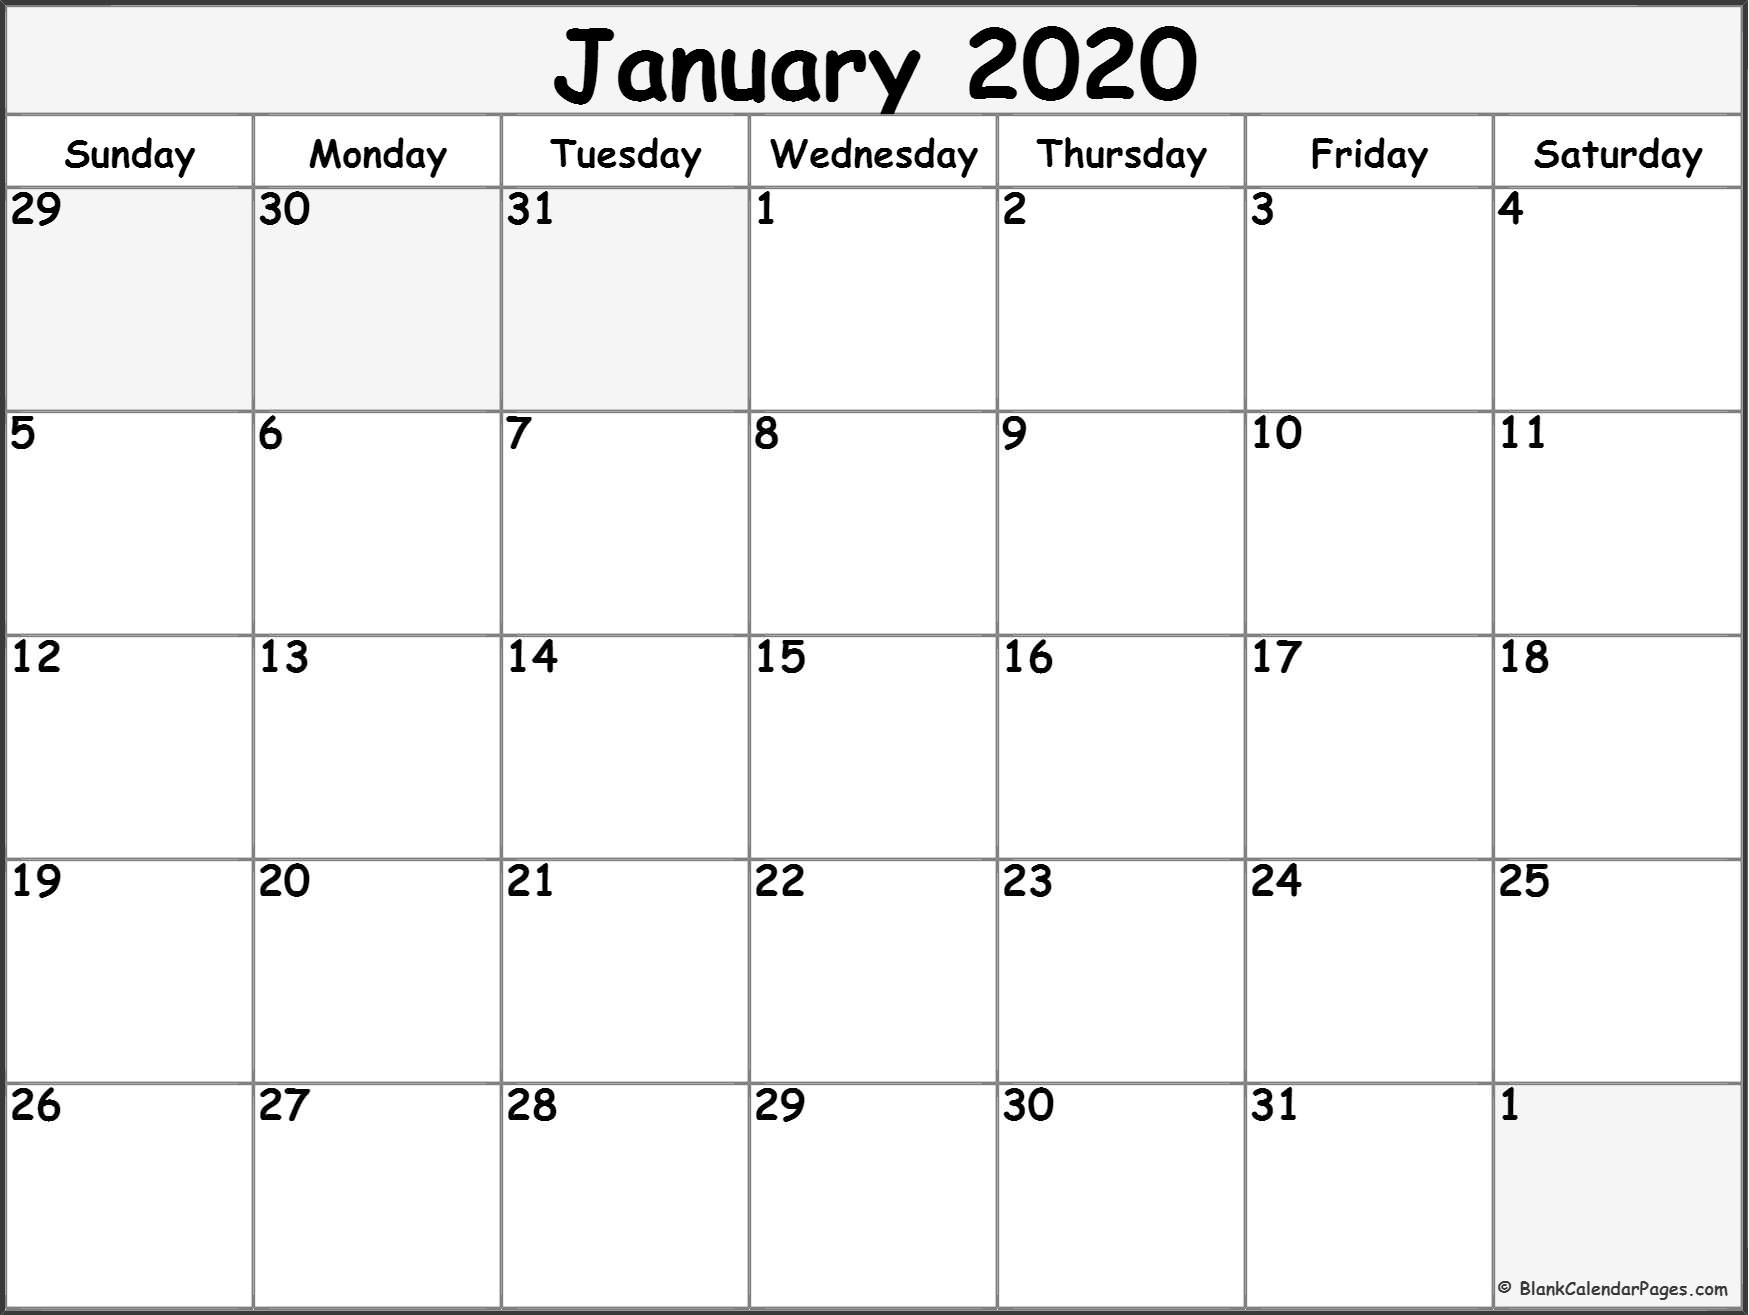 January 2020 Blank Calendar Printable Collection. Impressive Monthly Calendar January 2020